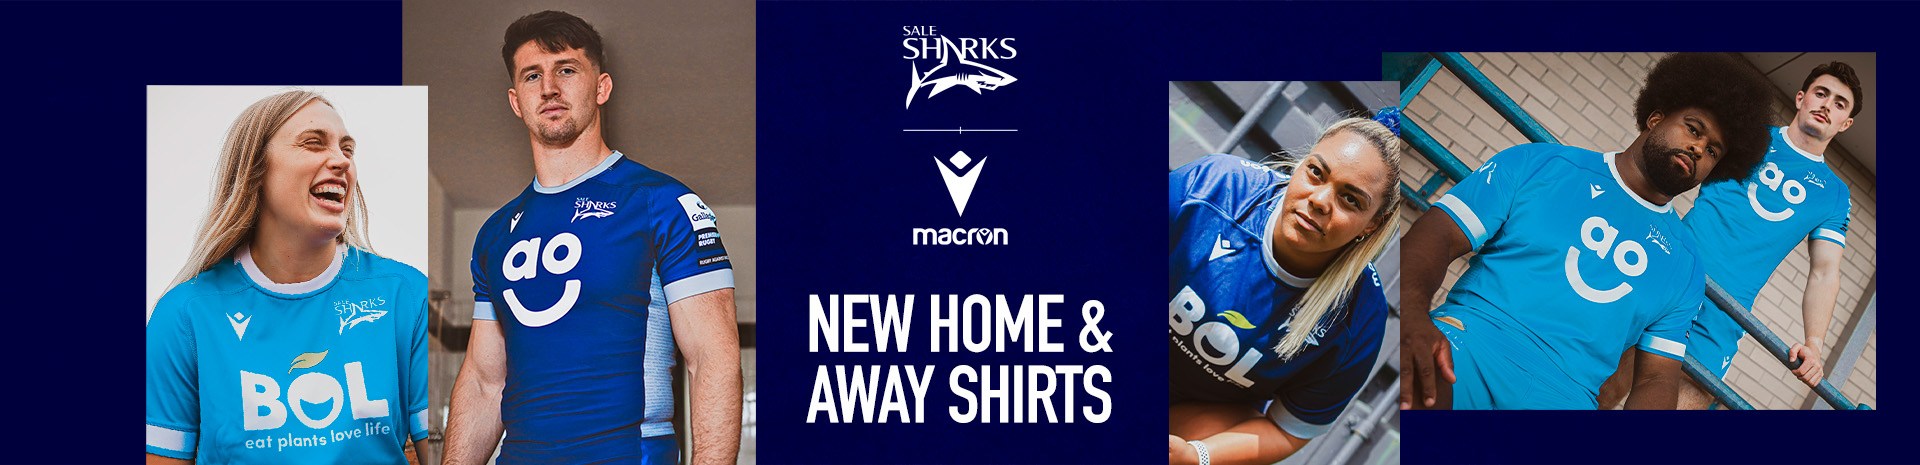 New Sale Sharks Away Shirt 2015-16 Fluoro Sale Rugby Kit 15-16 by Samurai  Sports